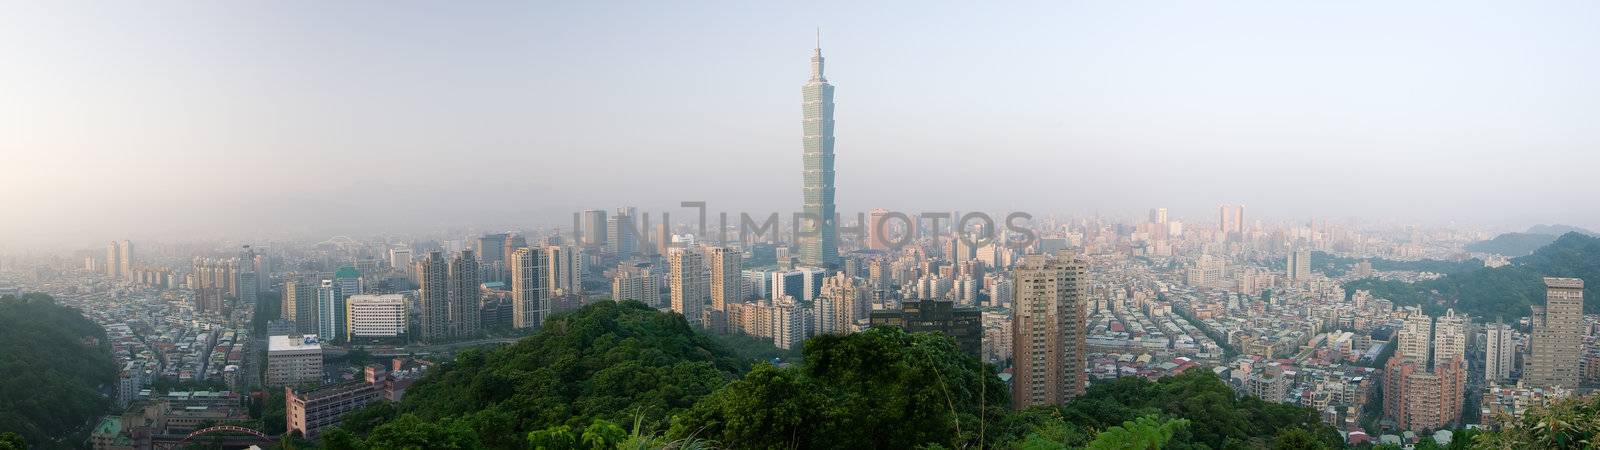 Panoramic cityscape of Taipei skyline by elwynn